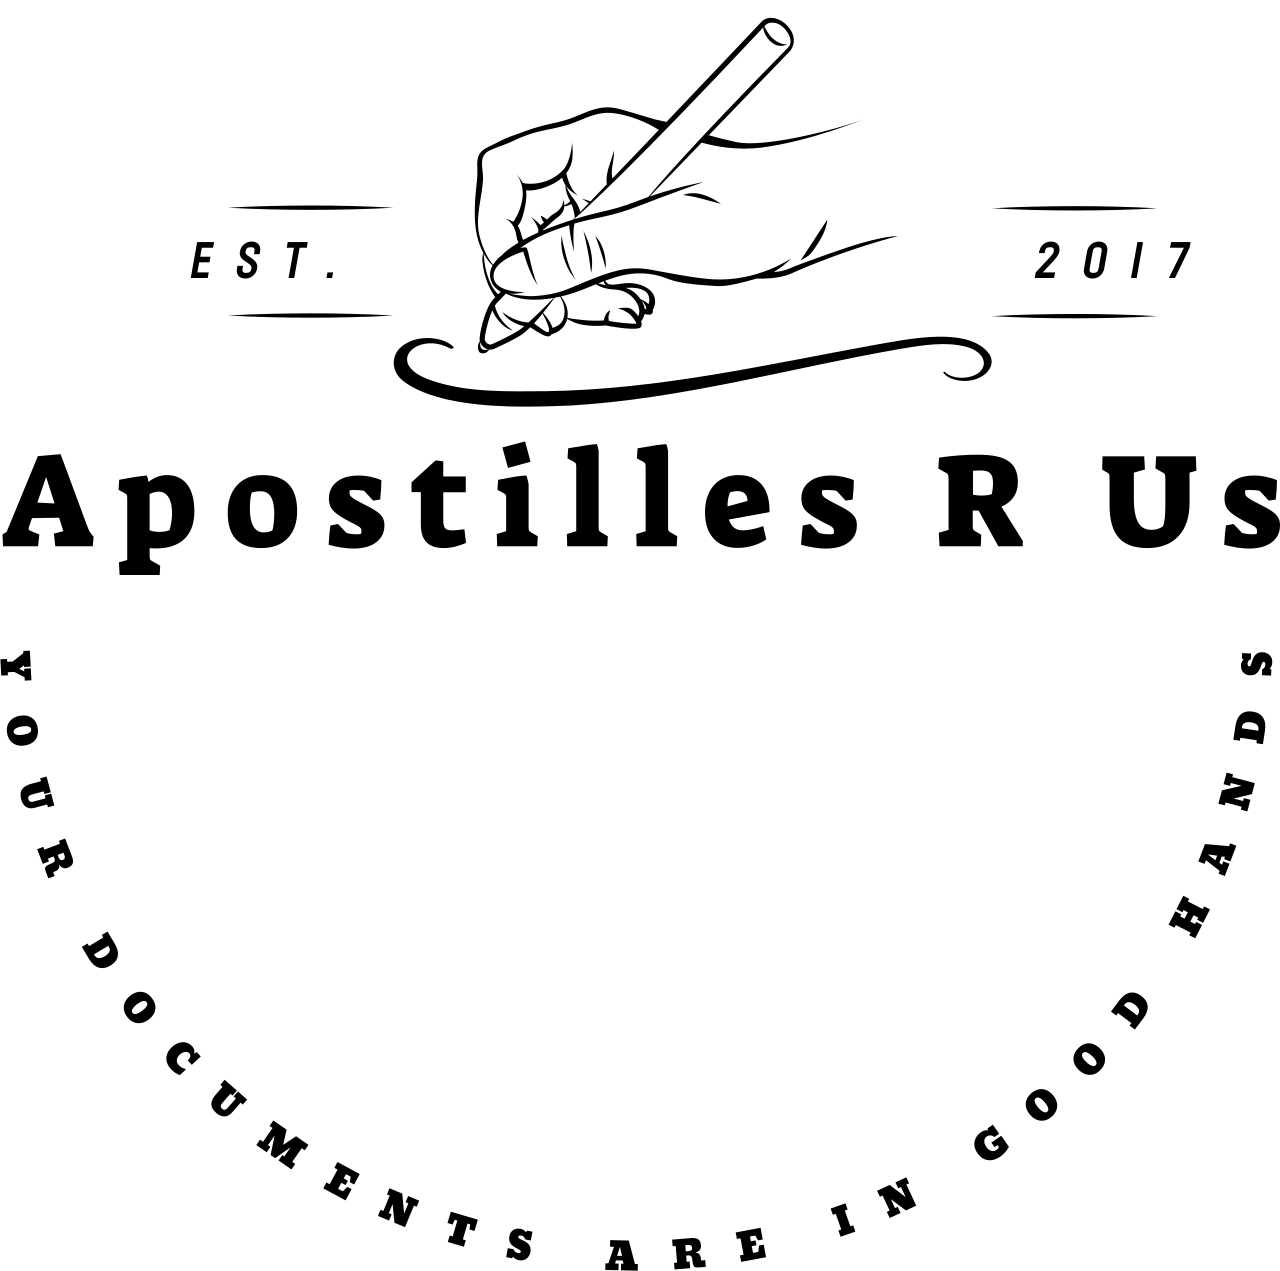 Apostilles R Us's logo